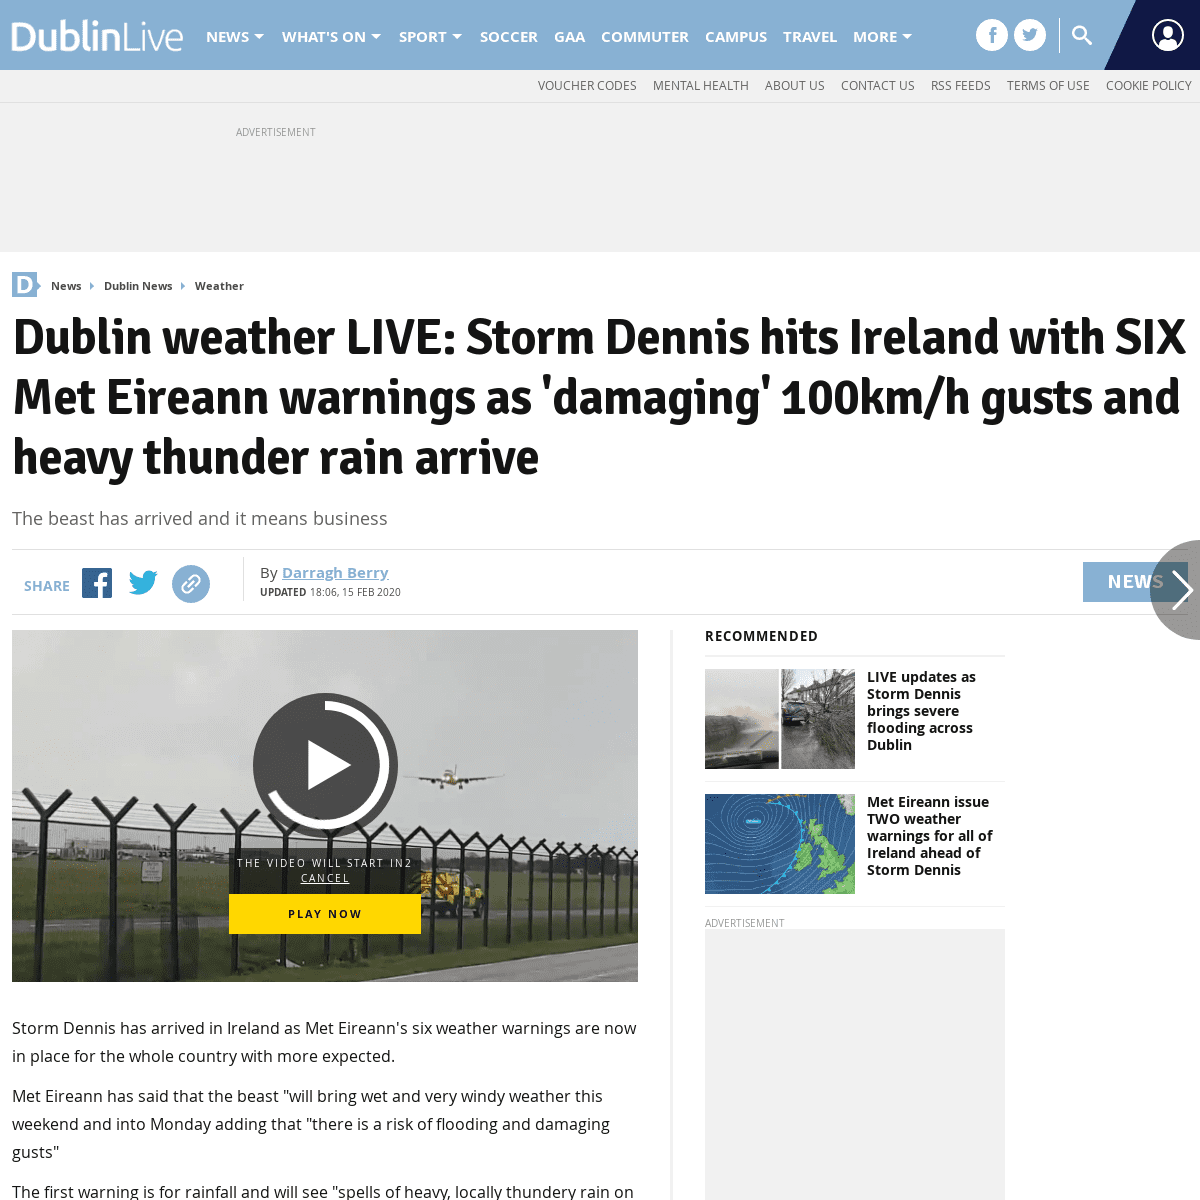 A complete backup of www.dublinlive.ie/news/dublin-news/stormdennis-ireland-meteireannupdates-dublin-weatherwarning-17753851